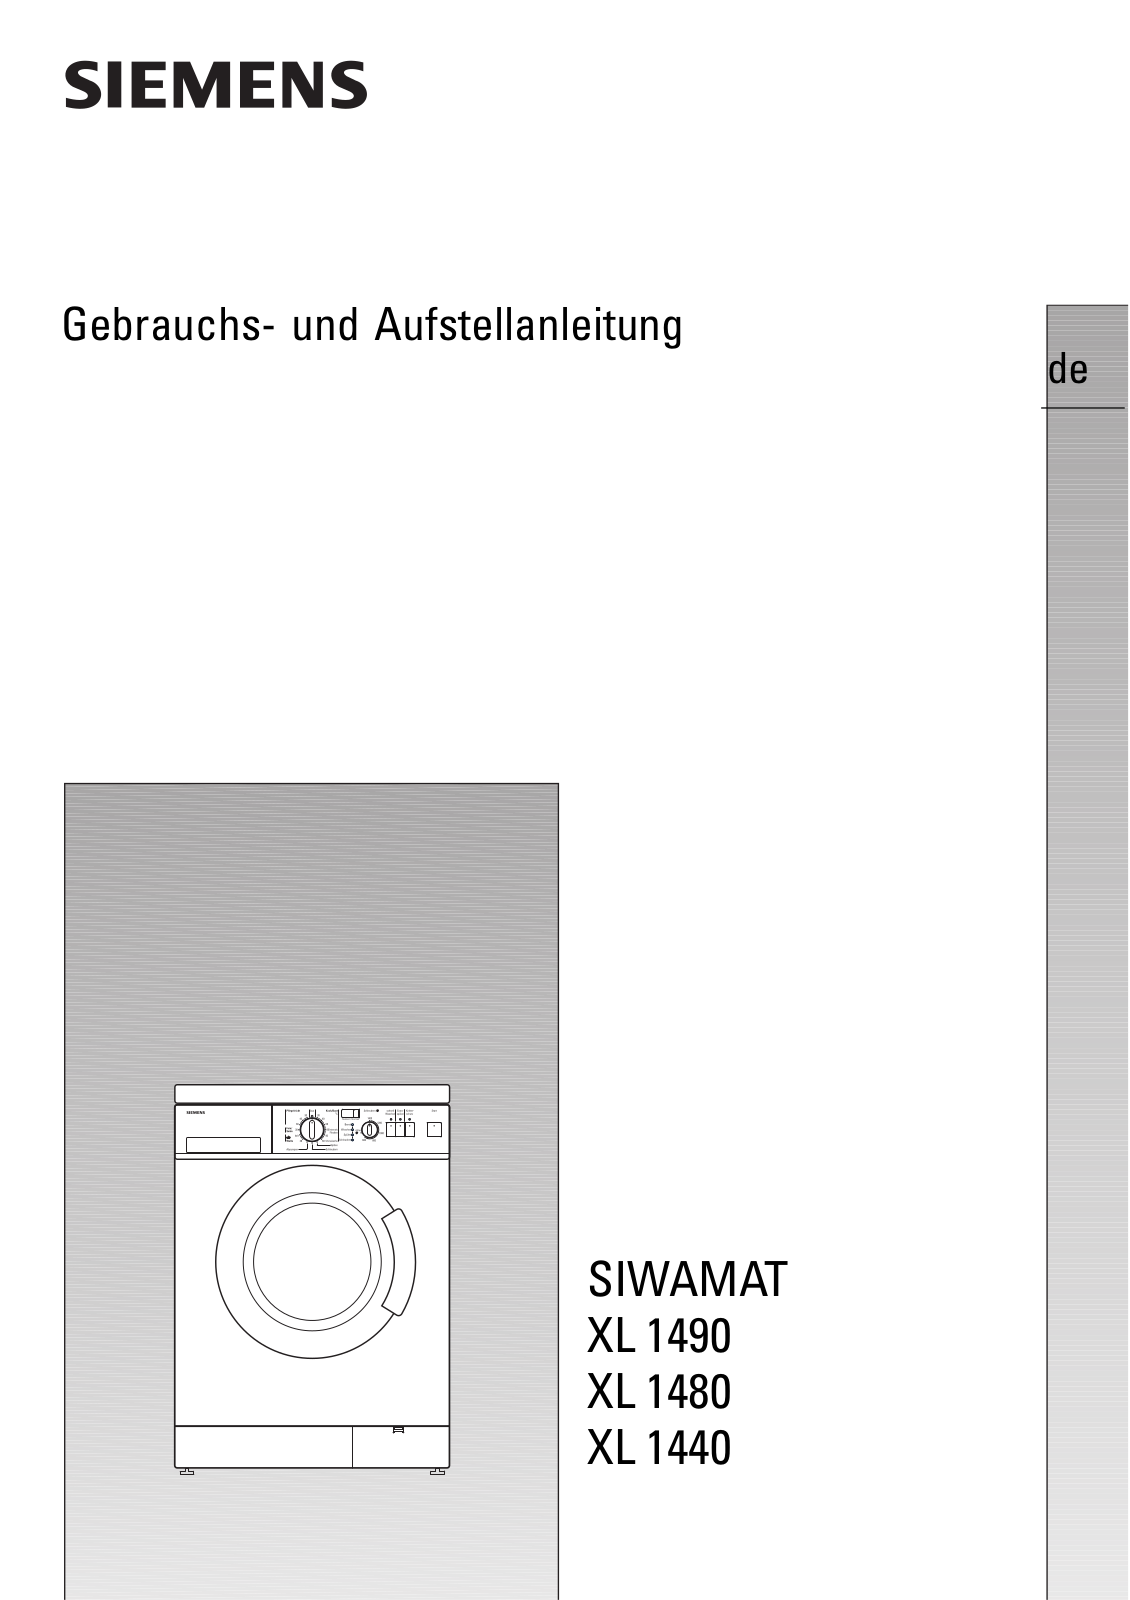 Siemens XL 1440, XL 1480, XL 1490 User Manual